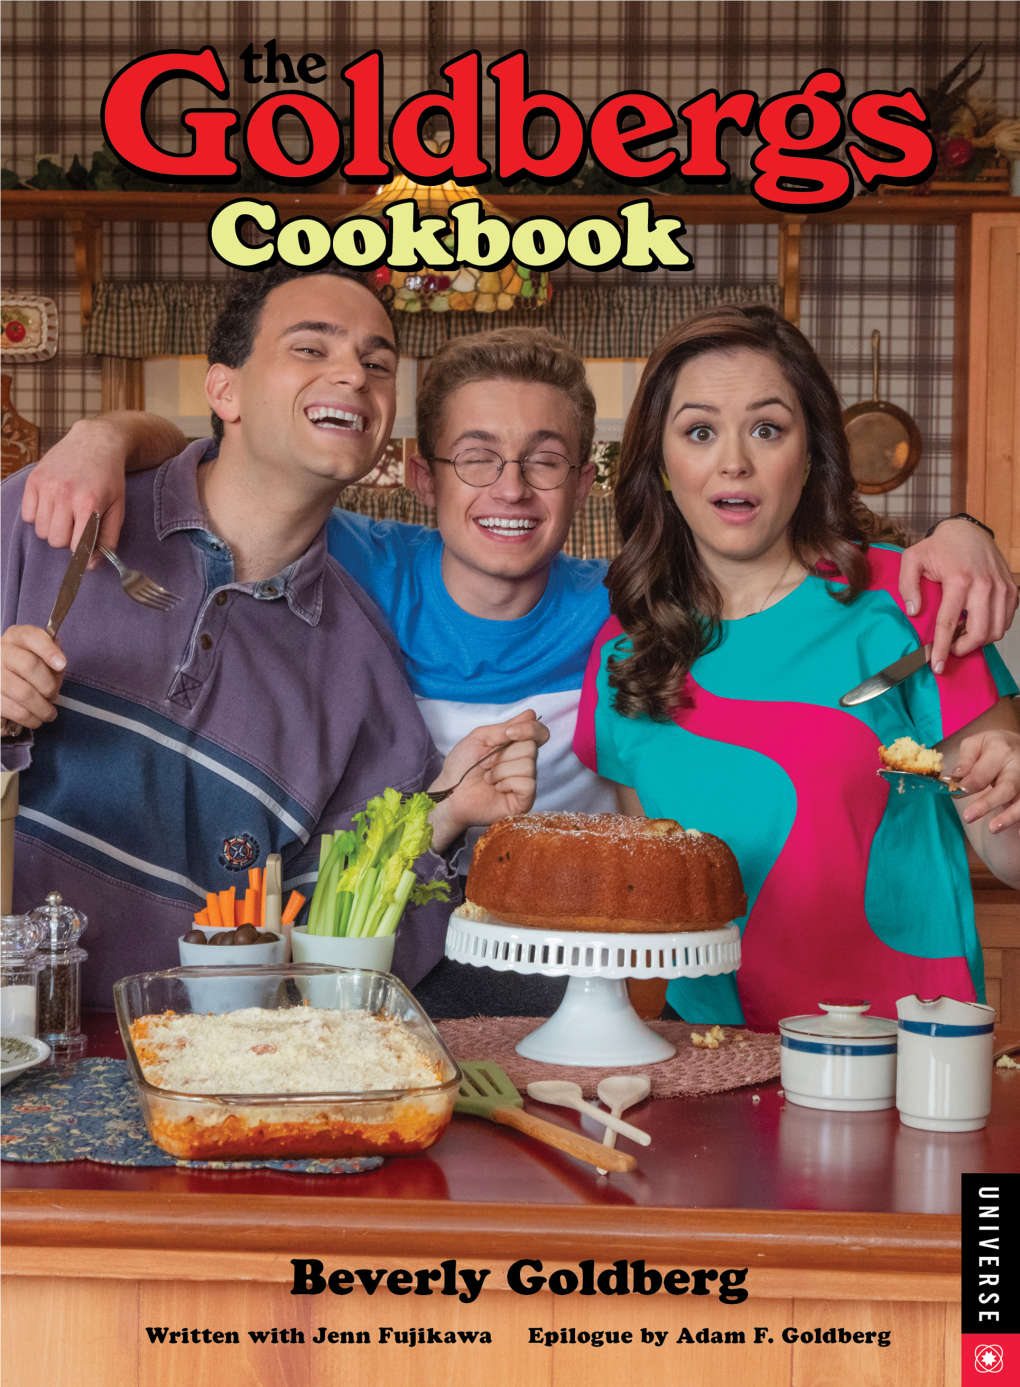 The Goldberg's Cookbook